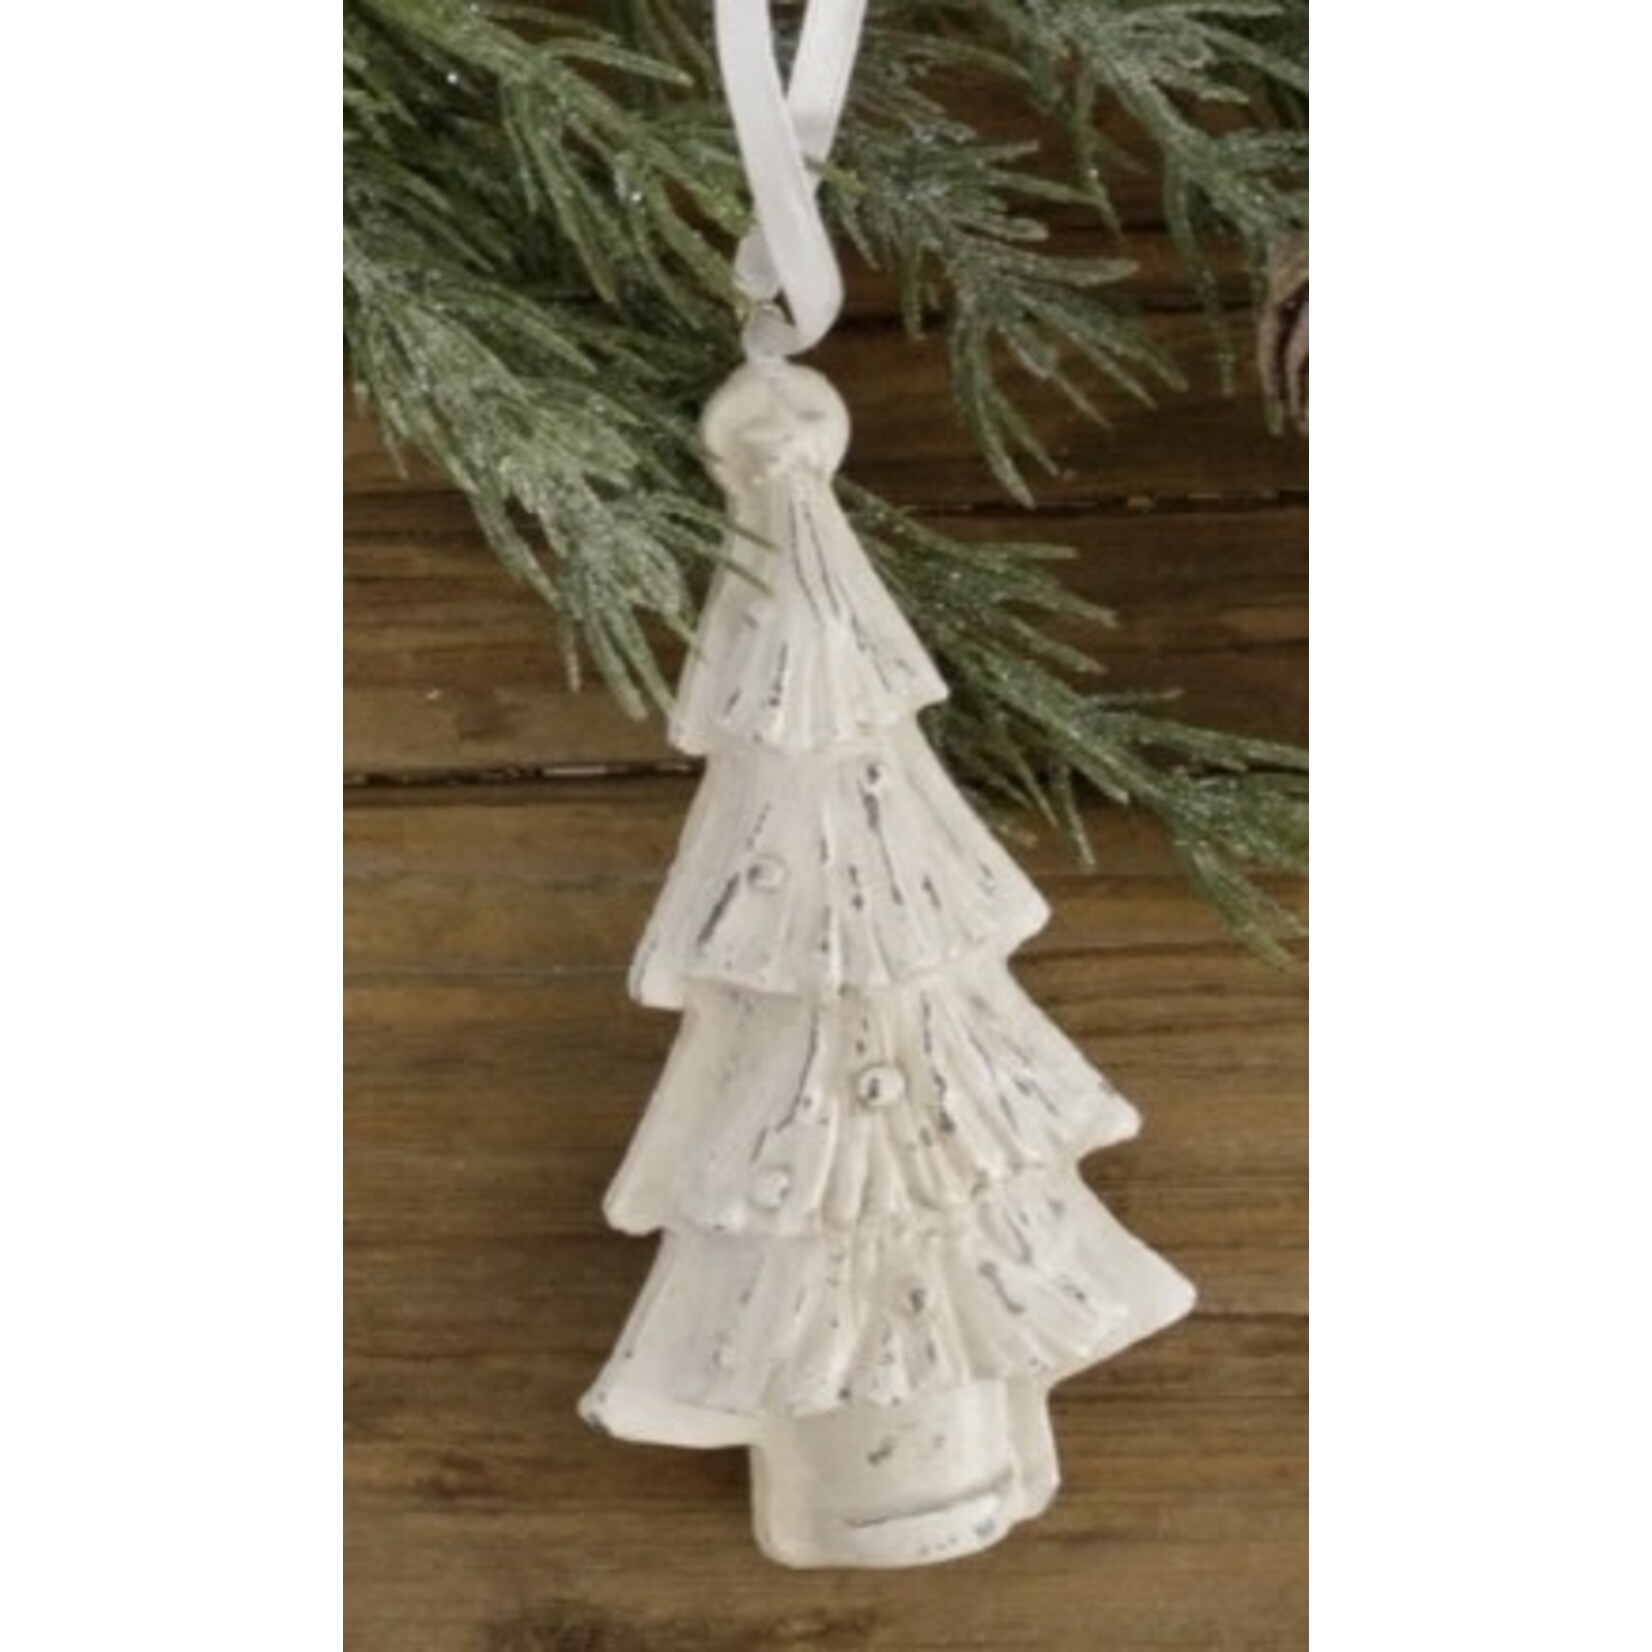 Audrey’s Christmas Mold Ornament Tree